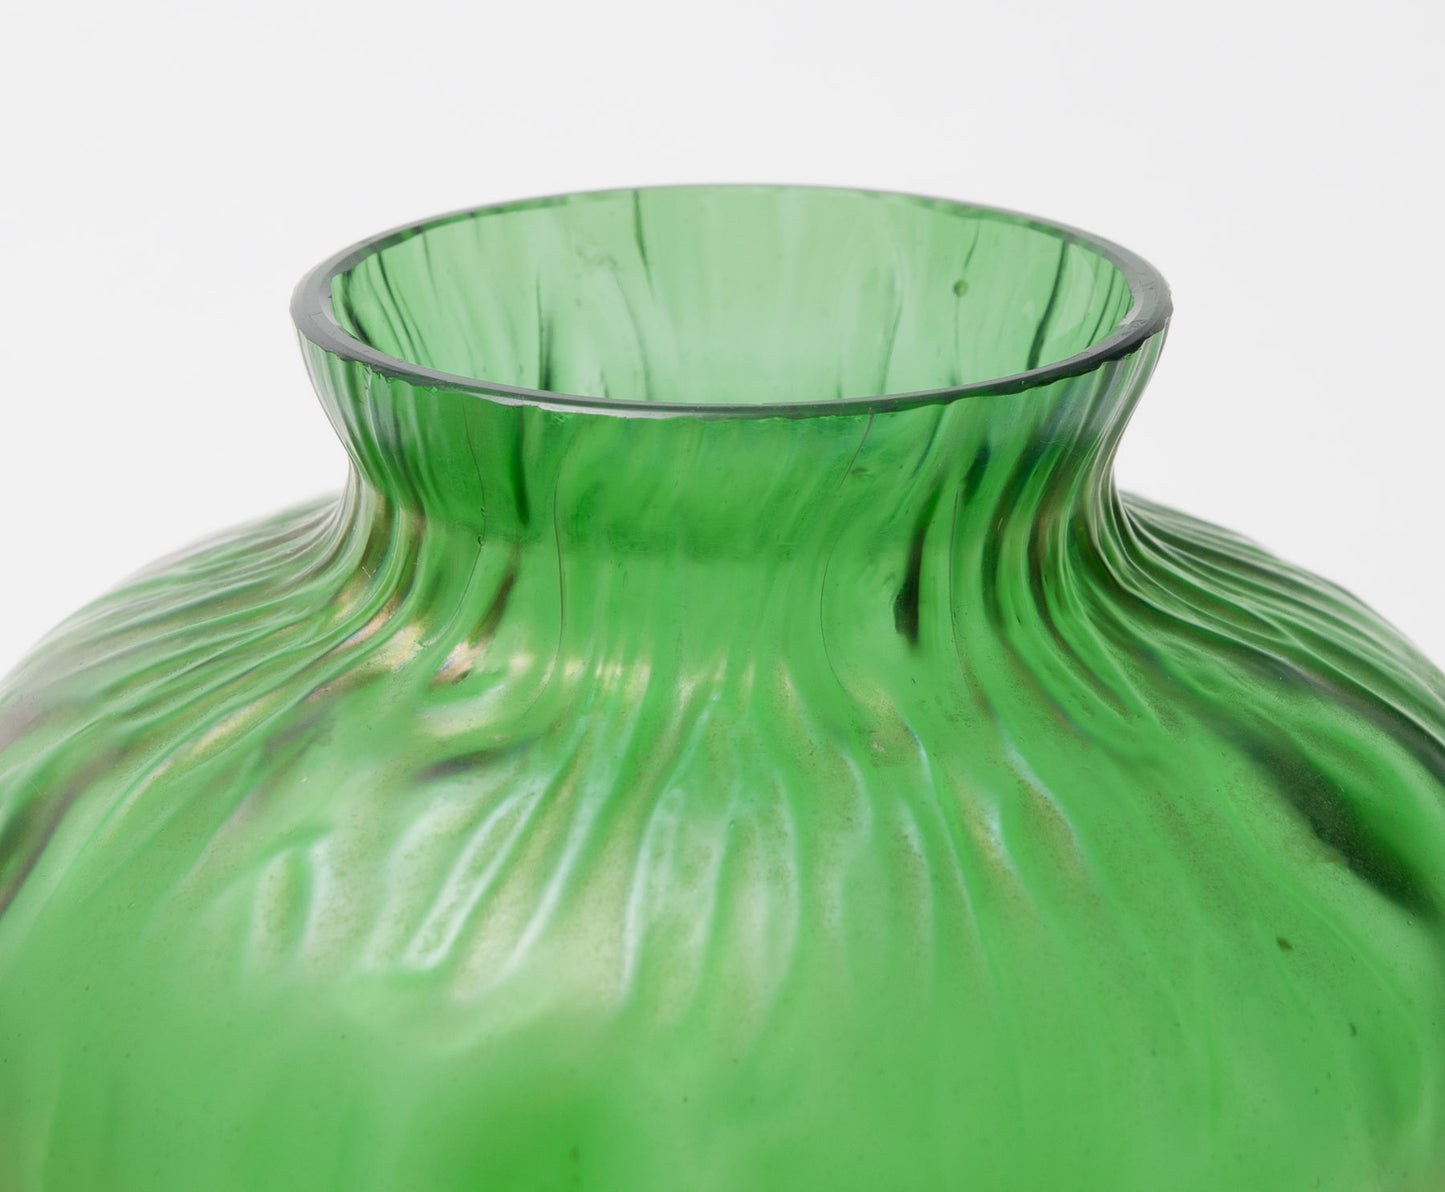 Loetz Art Nouveau Rusticana Iridescent Glass Vase With Silver Plated Mount (Code 0713)